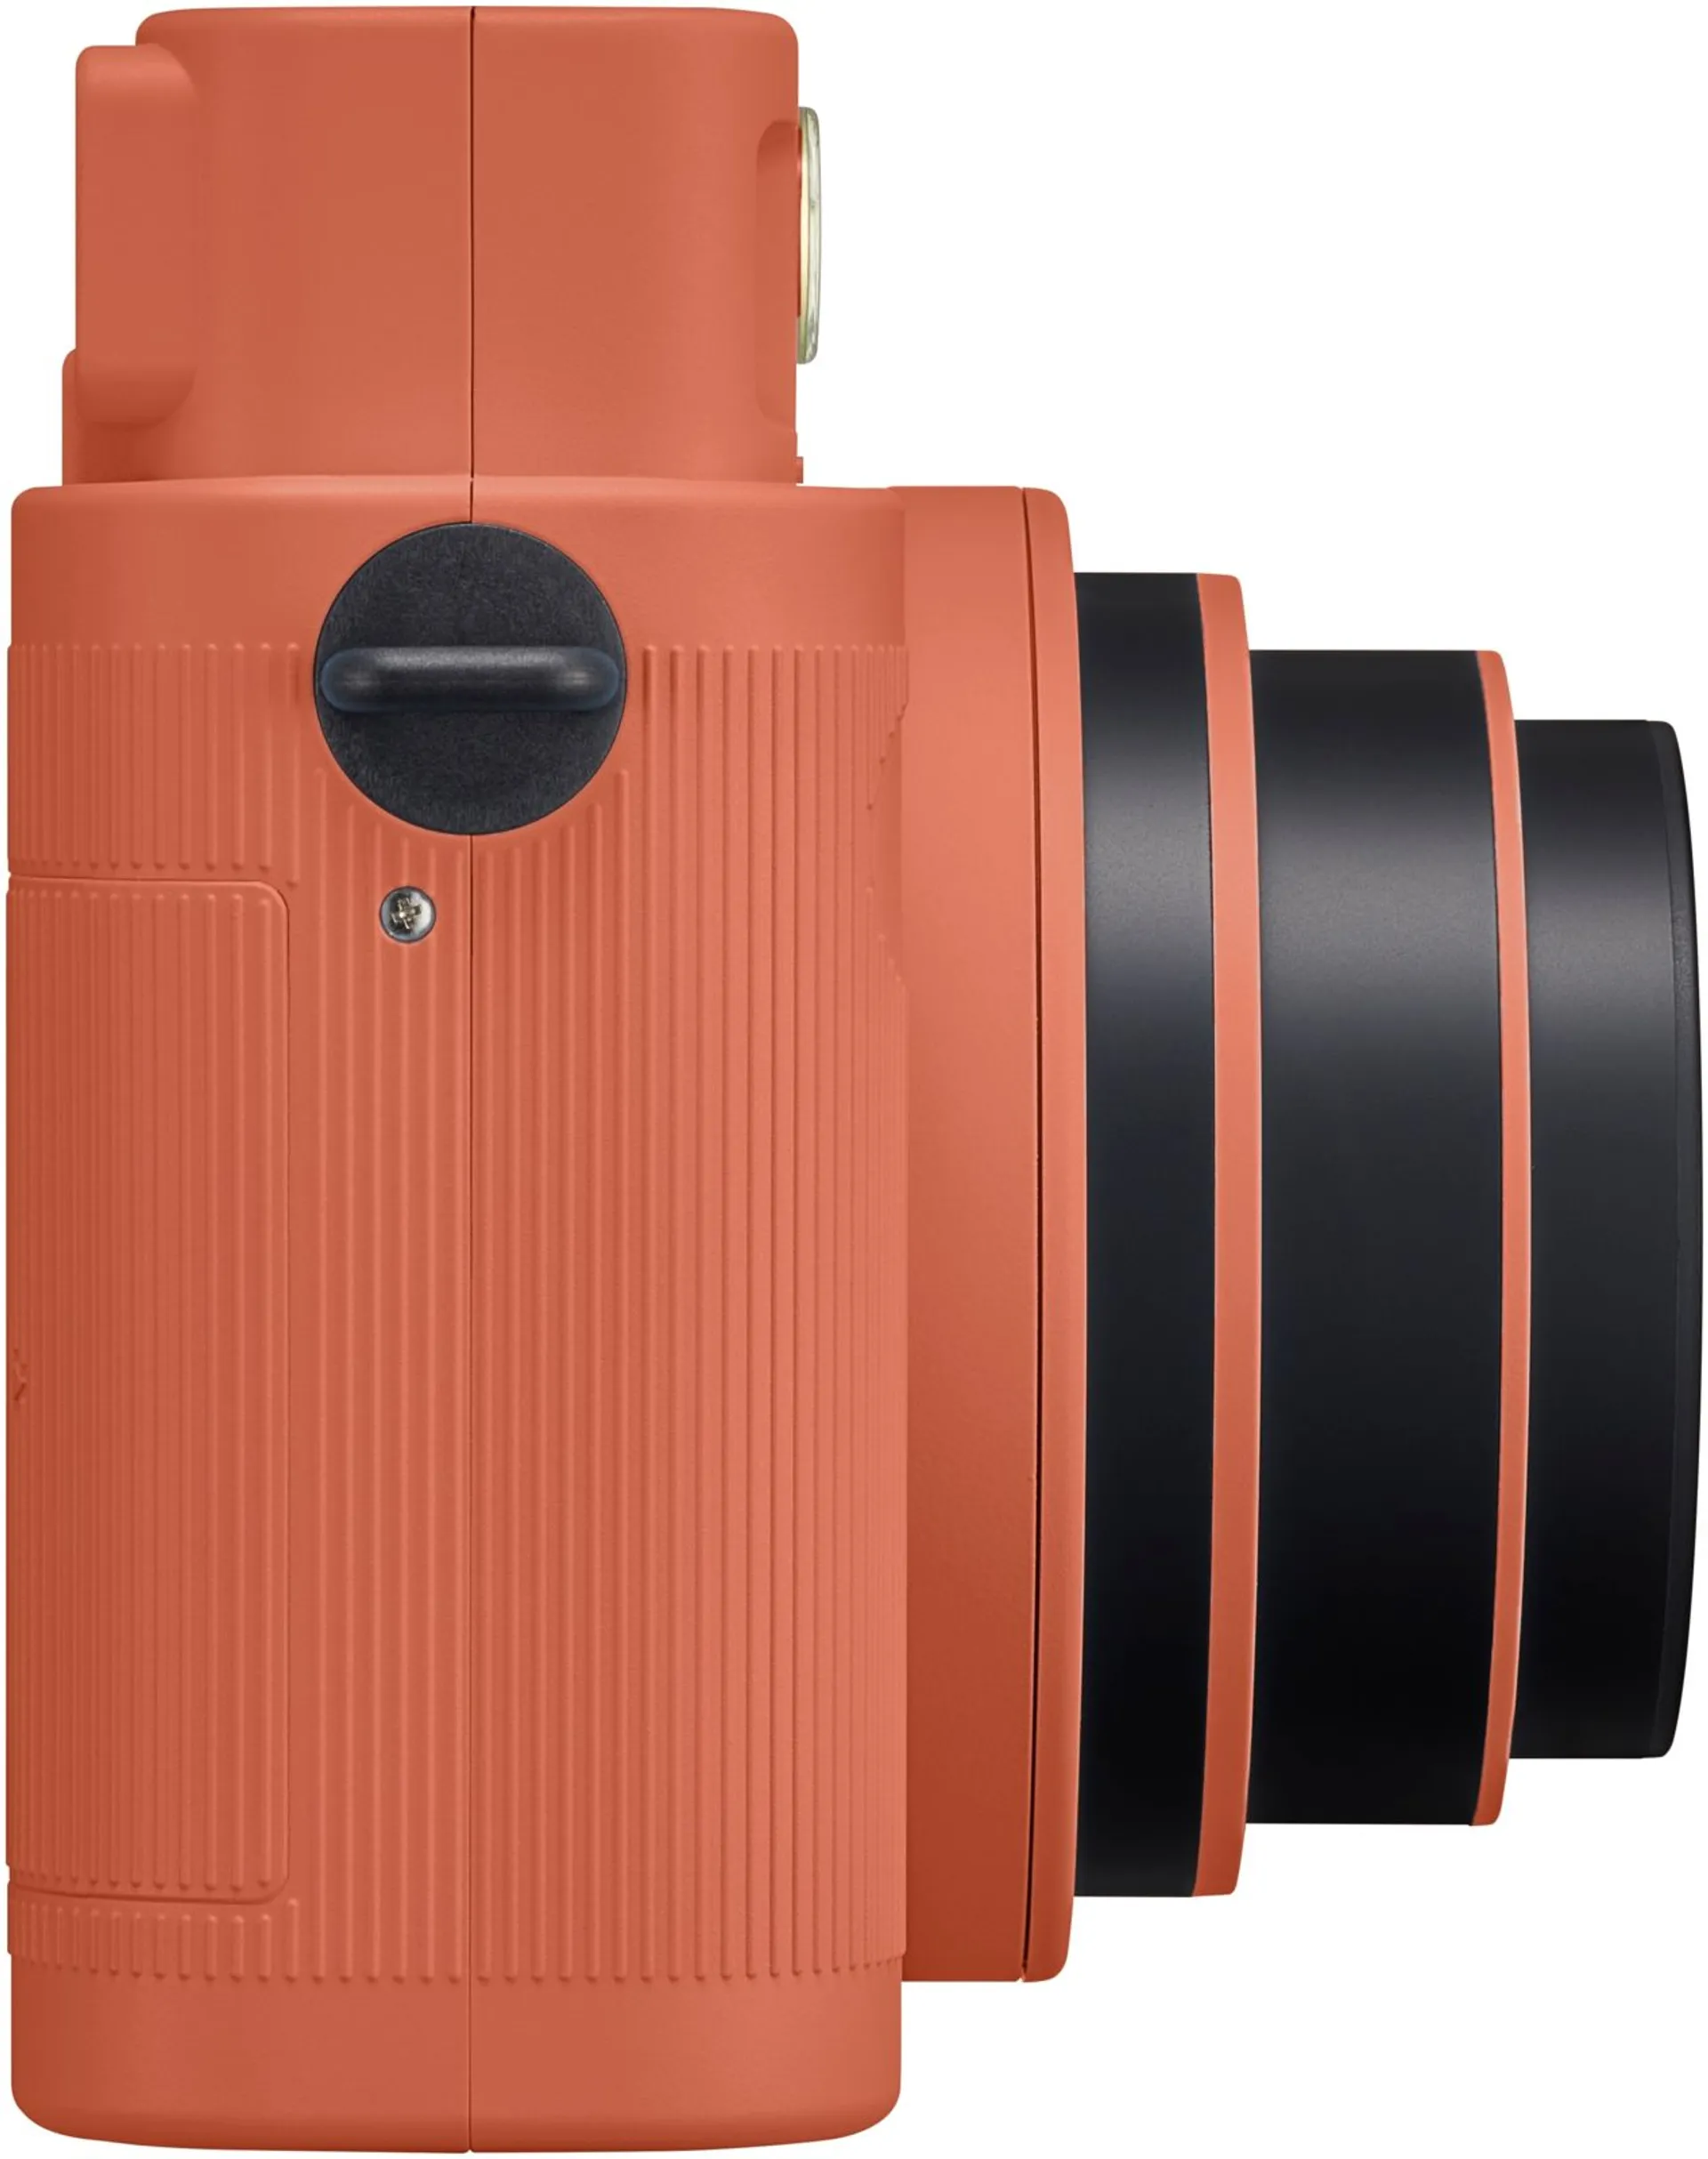 Fujifilm Instax SQ1 Terracotta Orange - 4